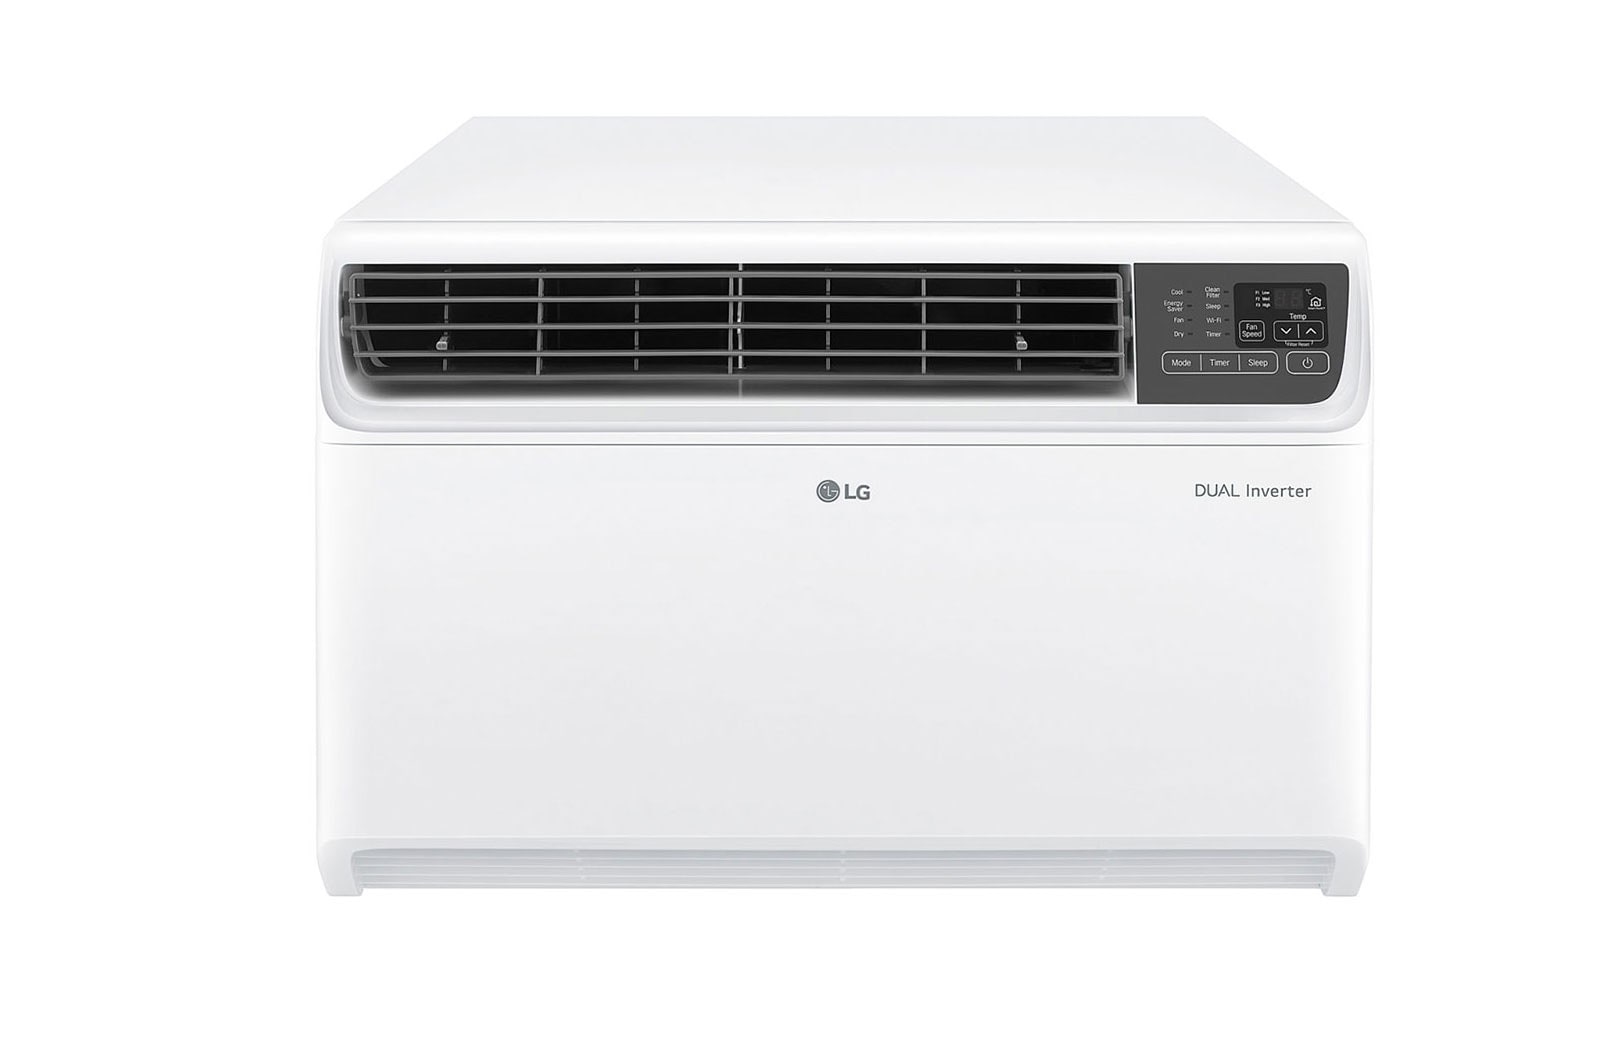 LG 5 Star (1.0), DUAL Inverter Window AC, Convertible, Wi-Fi, 2022 Model, PW-Q12WUZA